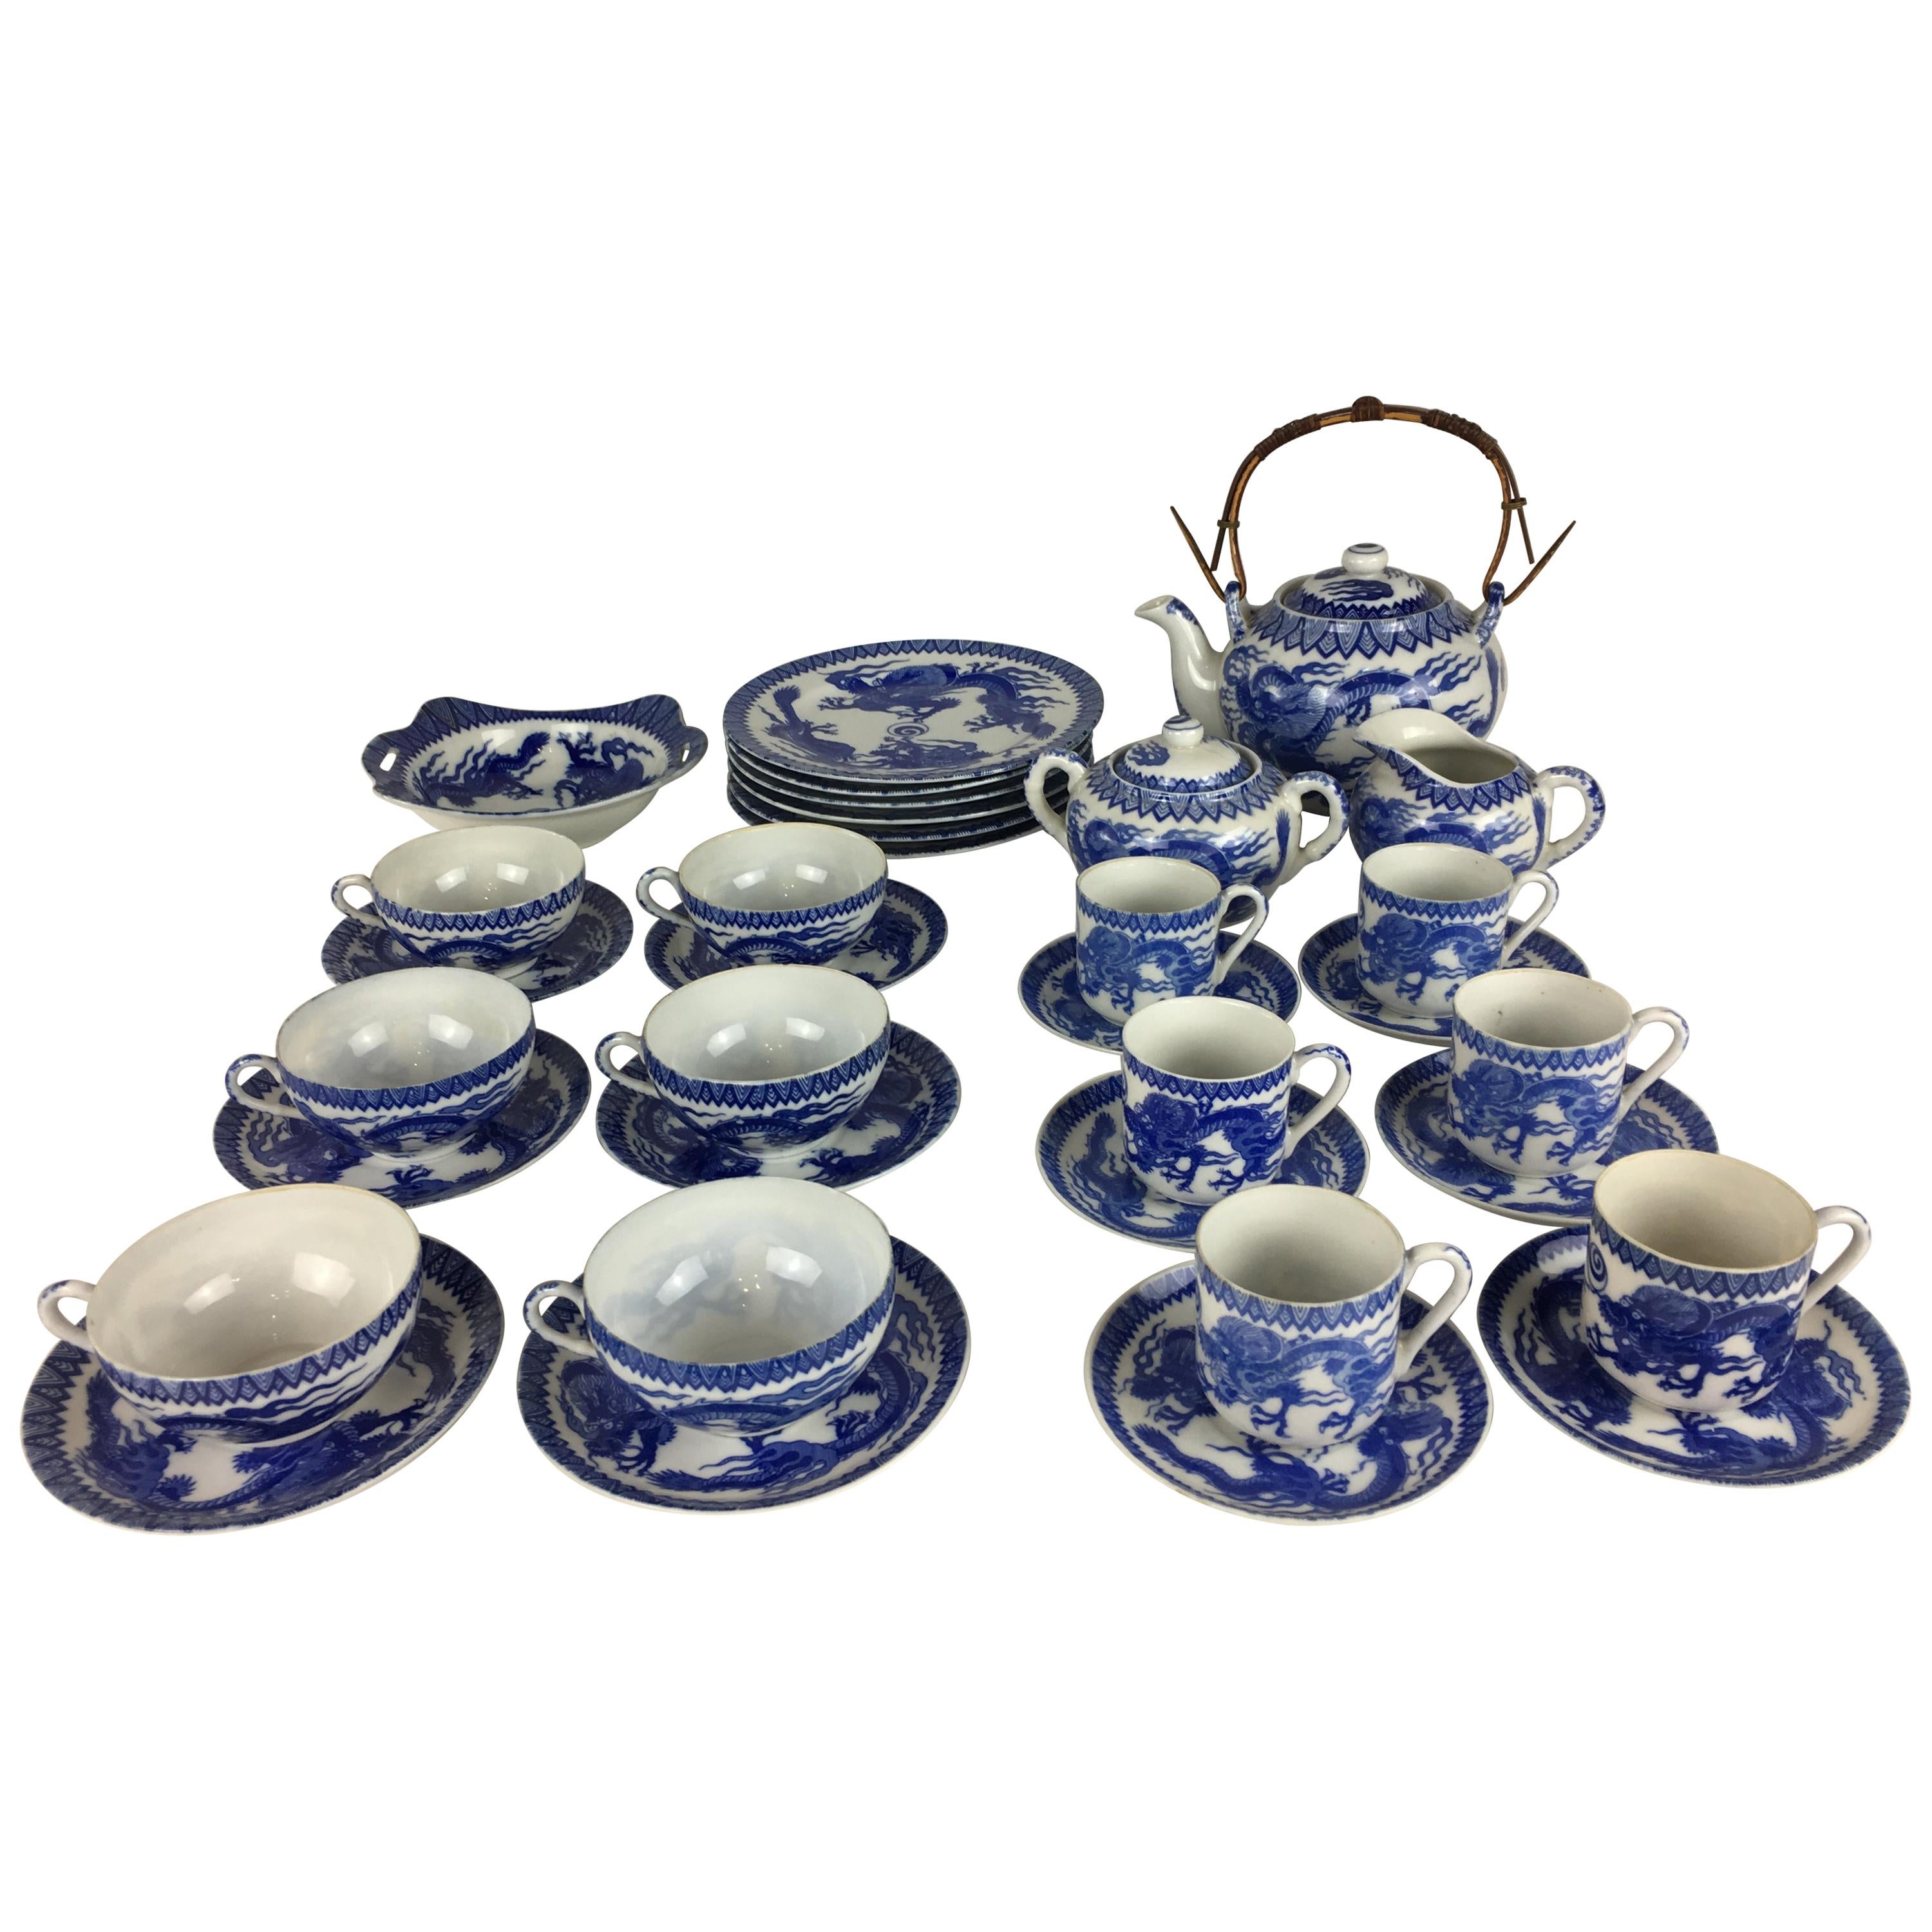 19th Century Japanese Blue and White Arita Porcelain Tea Service, 34 Pieces